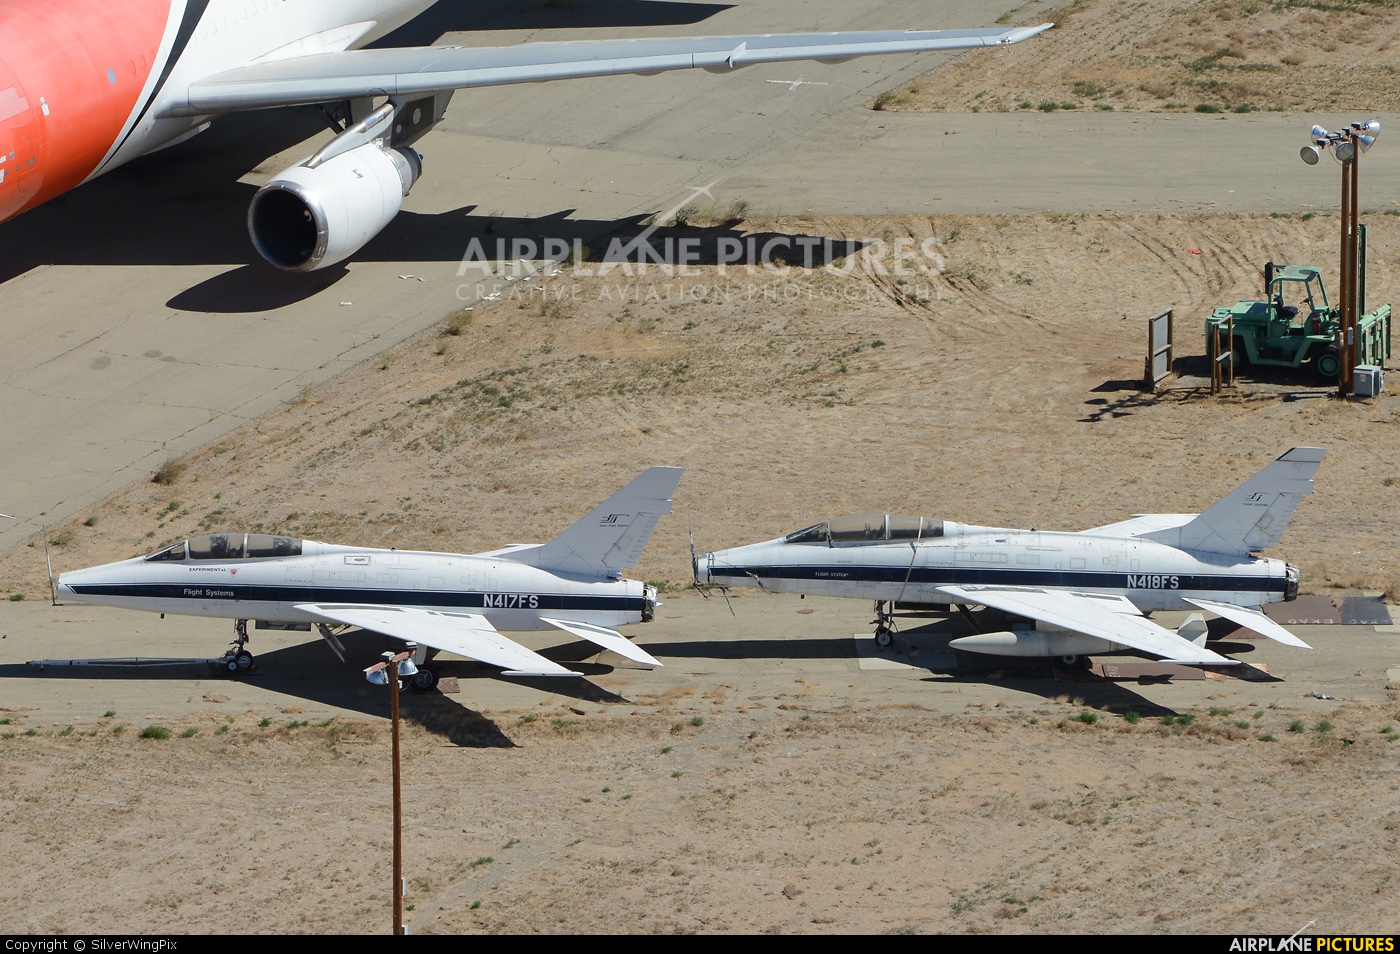 Tracor Flight Systems N417FS aircraft at Mojave